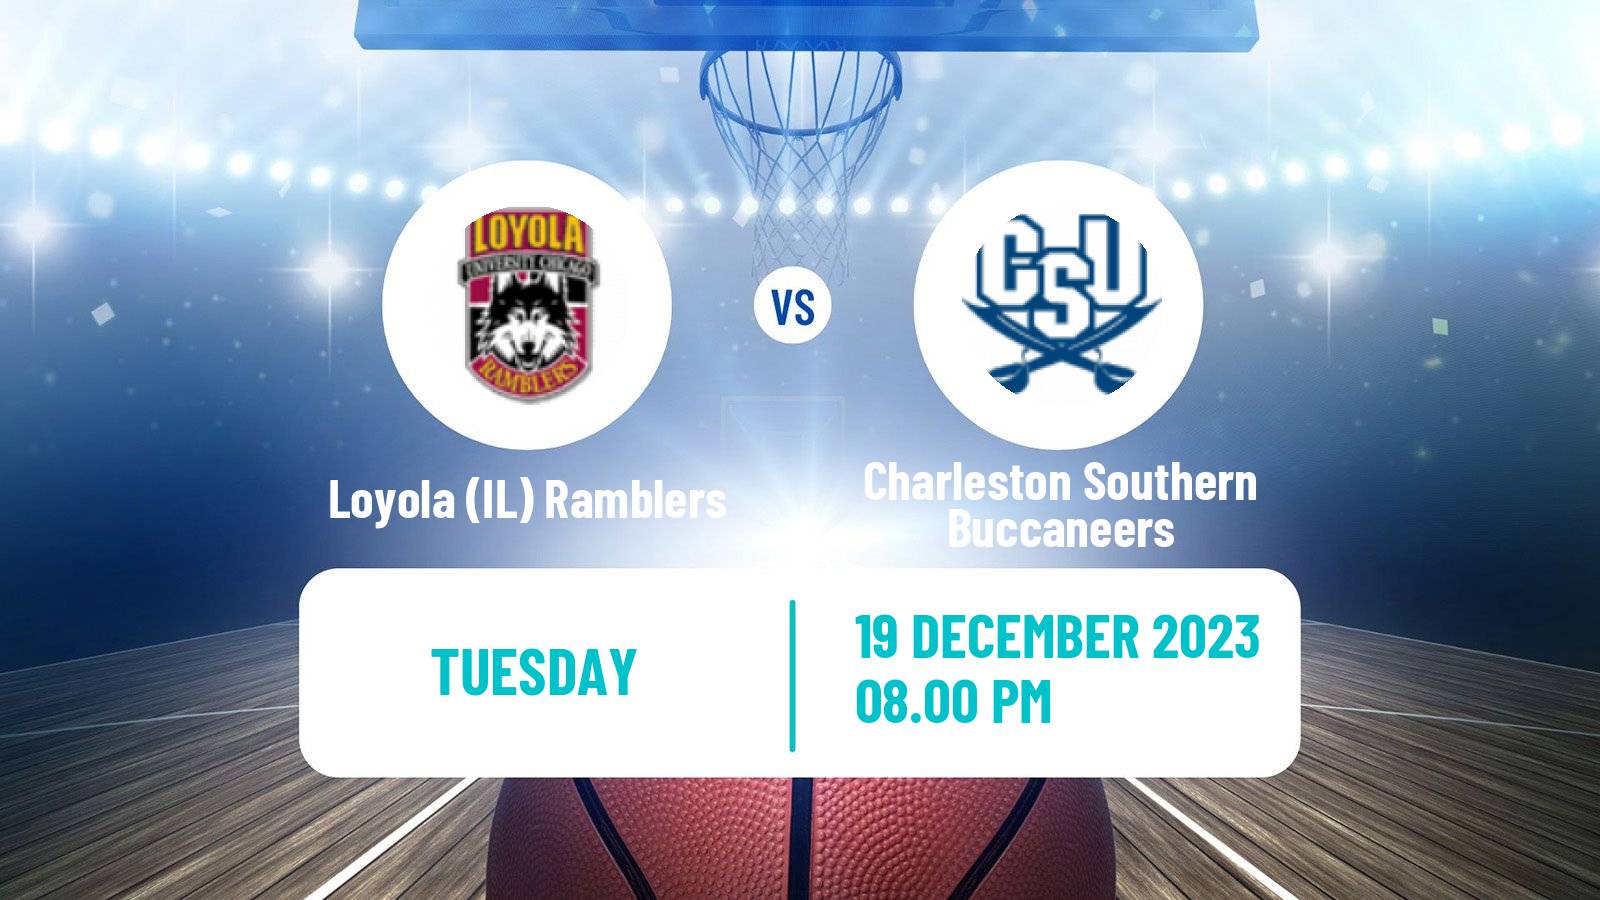 Basketball NCAA College Basketball Loyola (IL) Ramblers - Charleston Southern Buccaneers